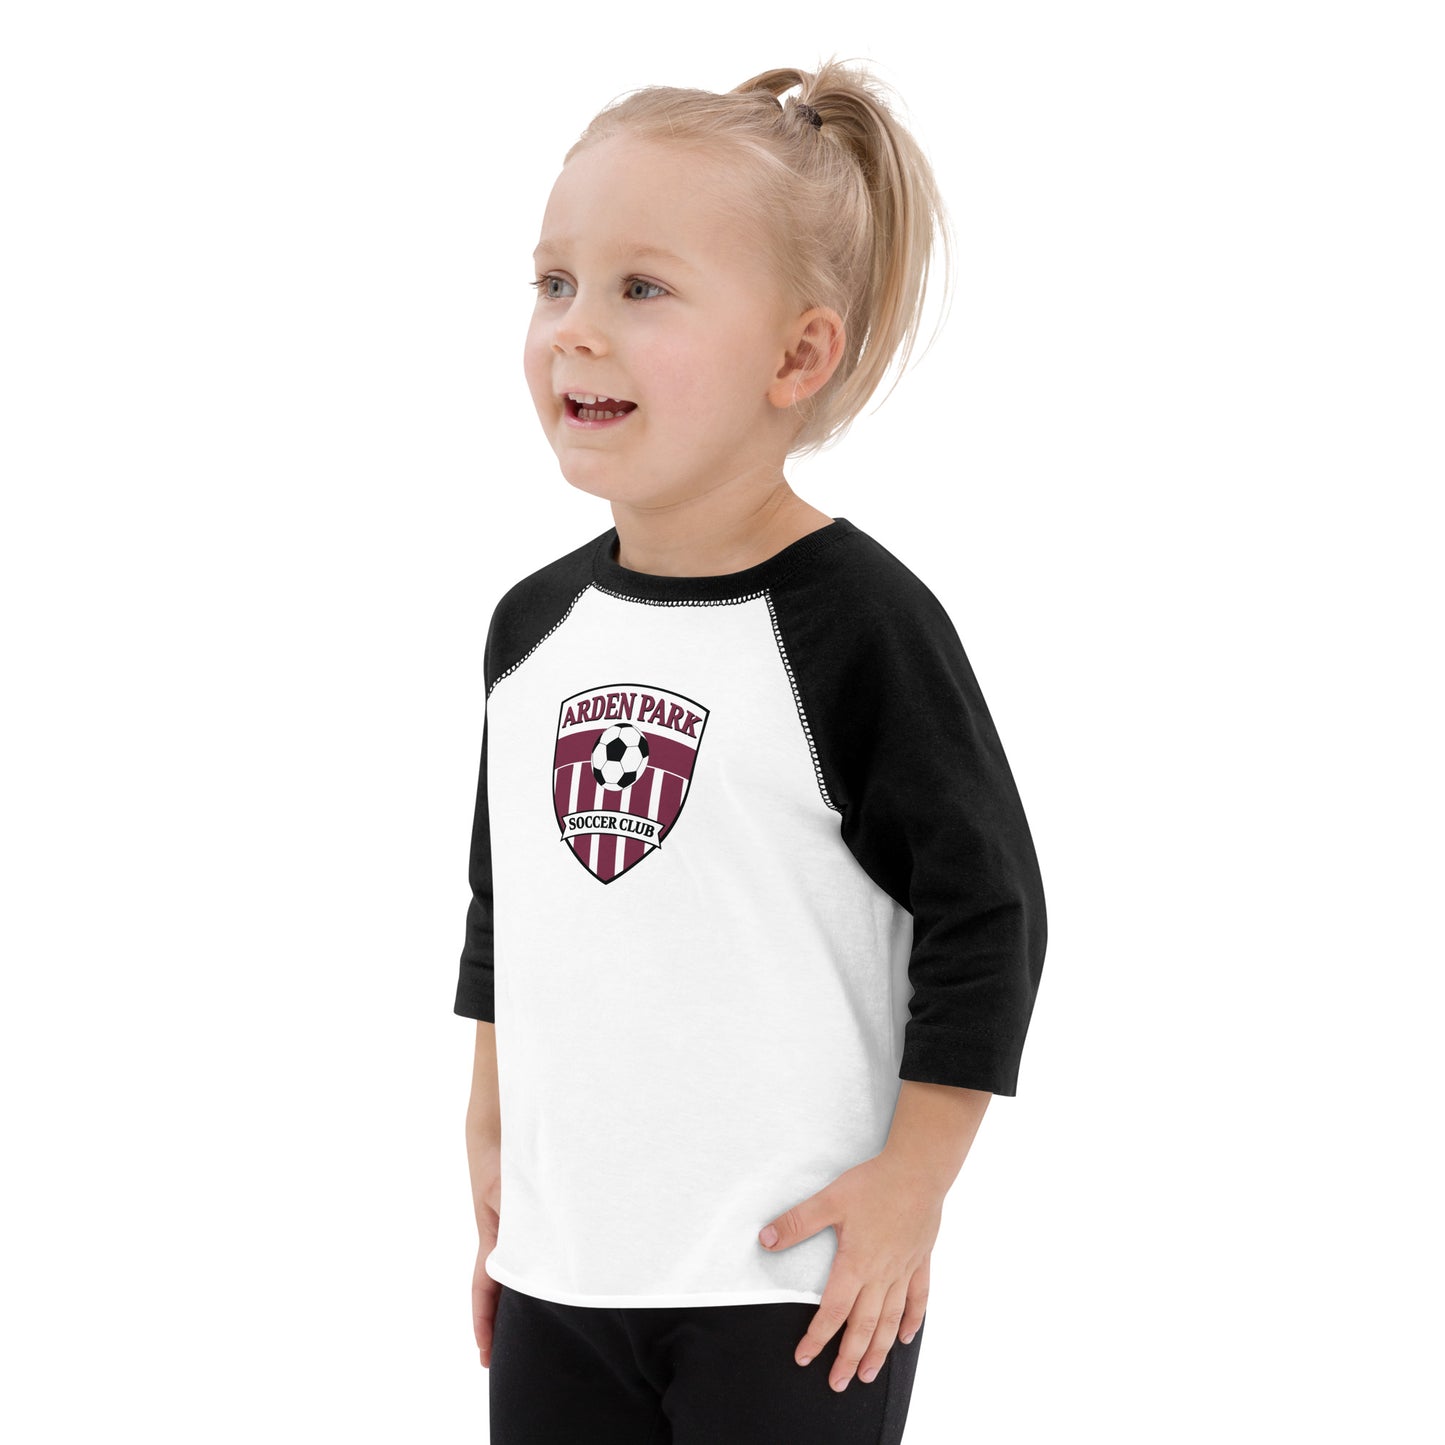 AP Soccer Toddler Shirt